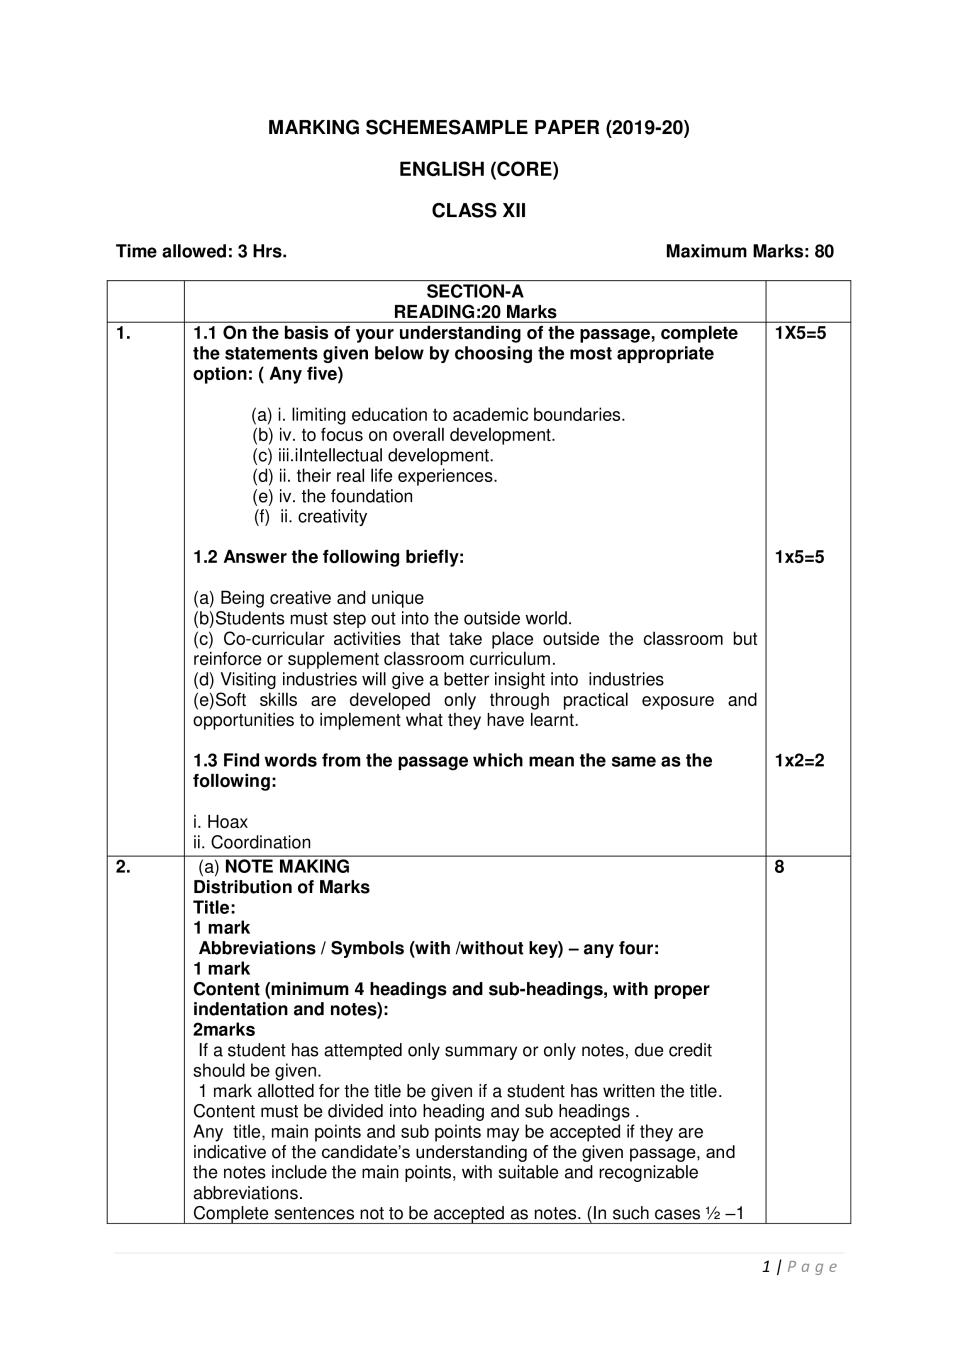 CBSE Class 12 Marking Scheme 2020 For English Core